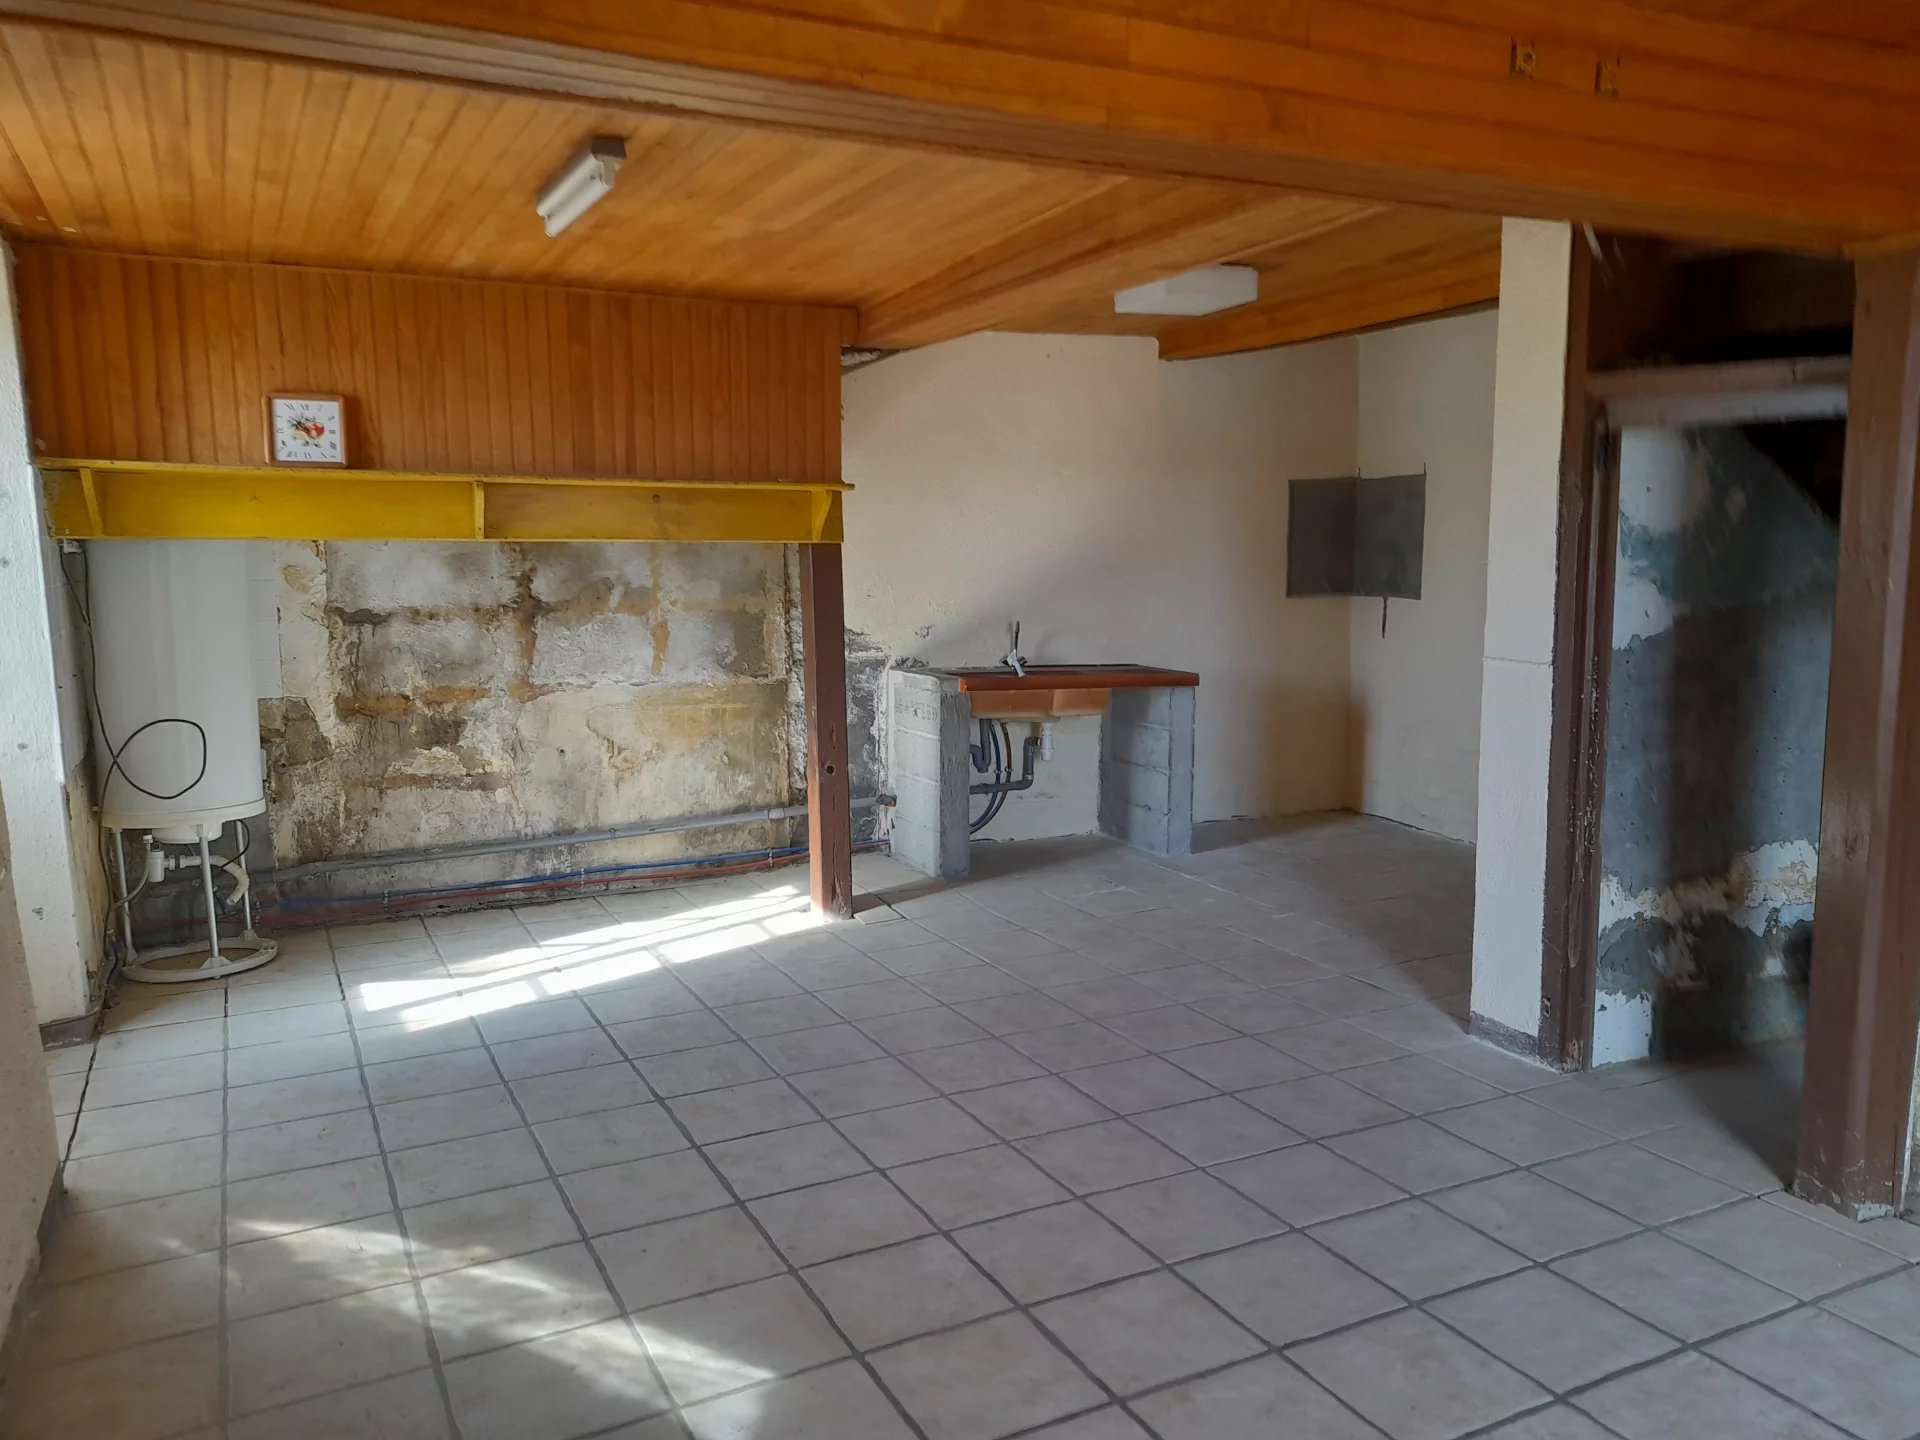 SAMAN, 67 m² village house to finish renovating